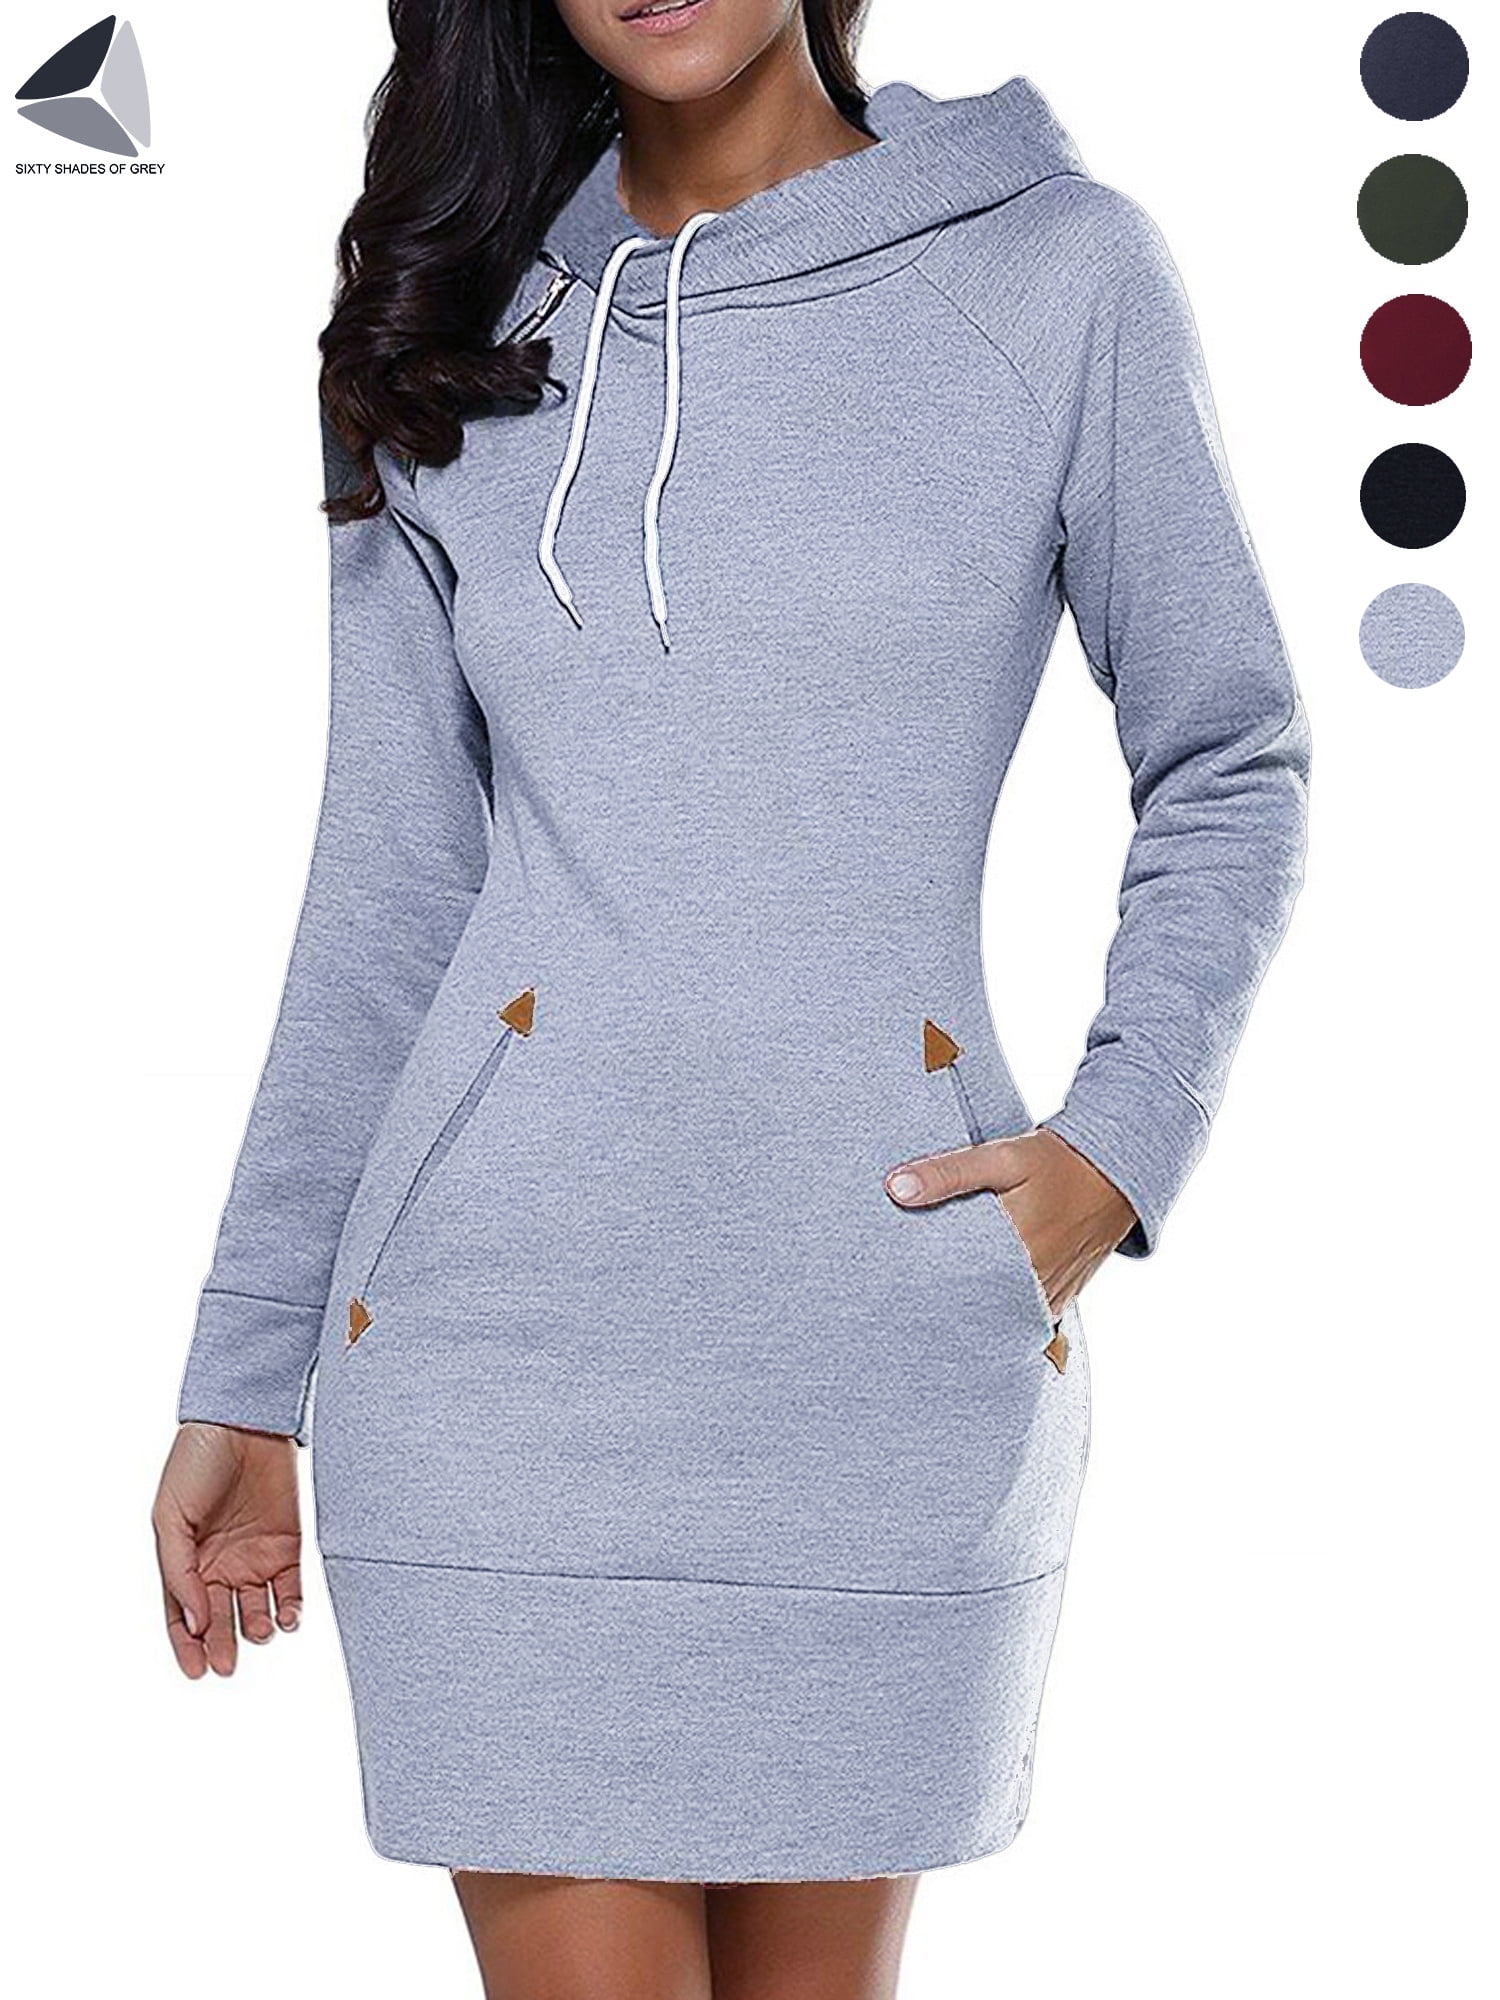 PULLIMORE Womens Winter Hoodie Dresses Slim Long Sleeve Pullover Sweatshirt  Dress with Pocket (M, Light Gray)